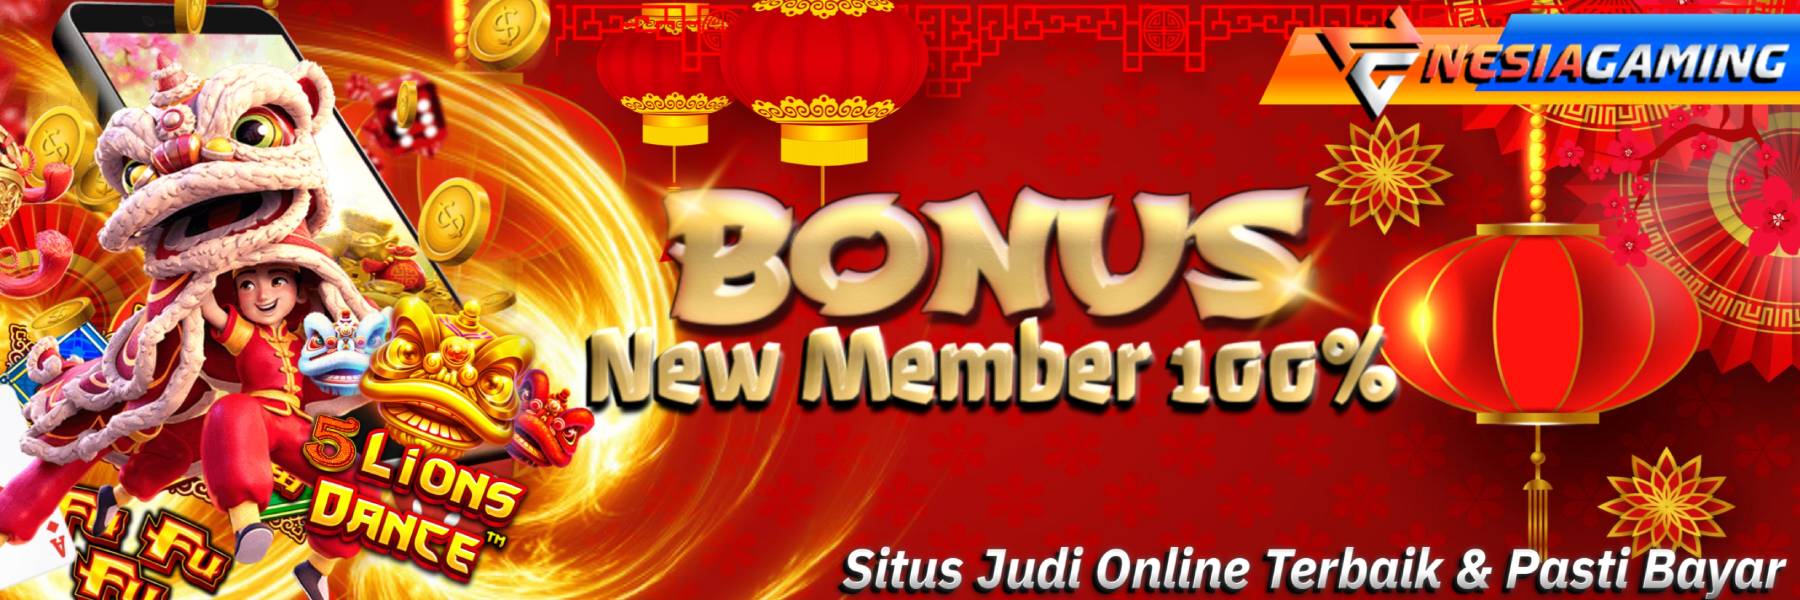 NesiaGaming Bonus New Member | Bonus New Member 100% | Slot Bonus 100 | Bonus 100 | Slot 100 | Slot Bonus 100%